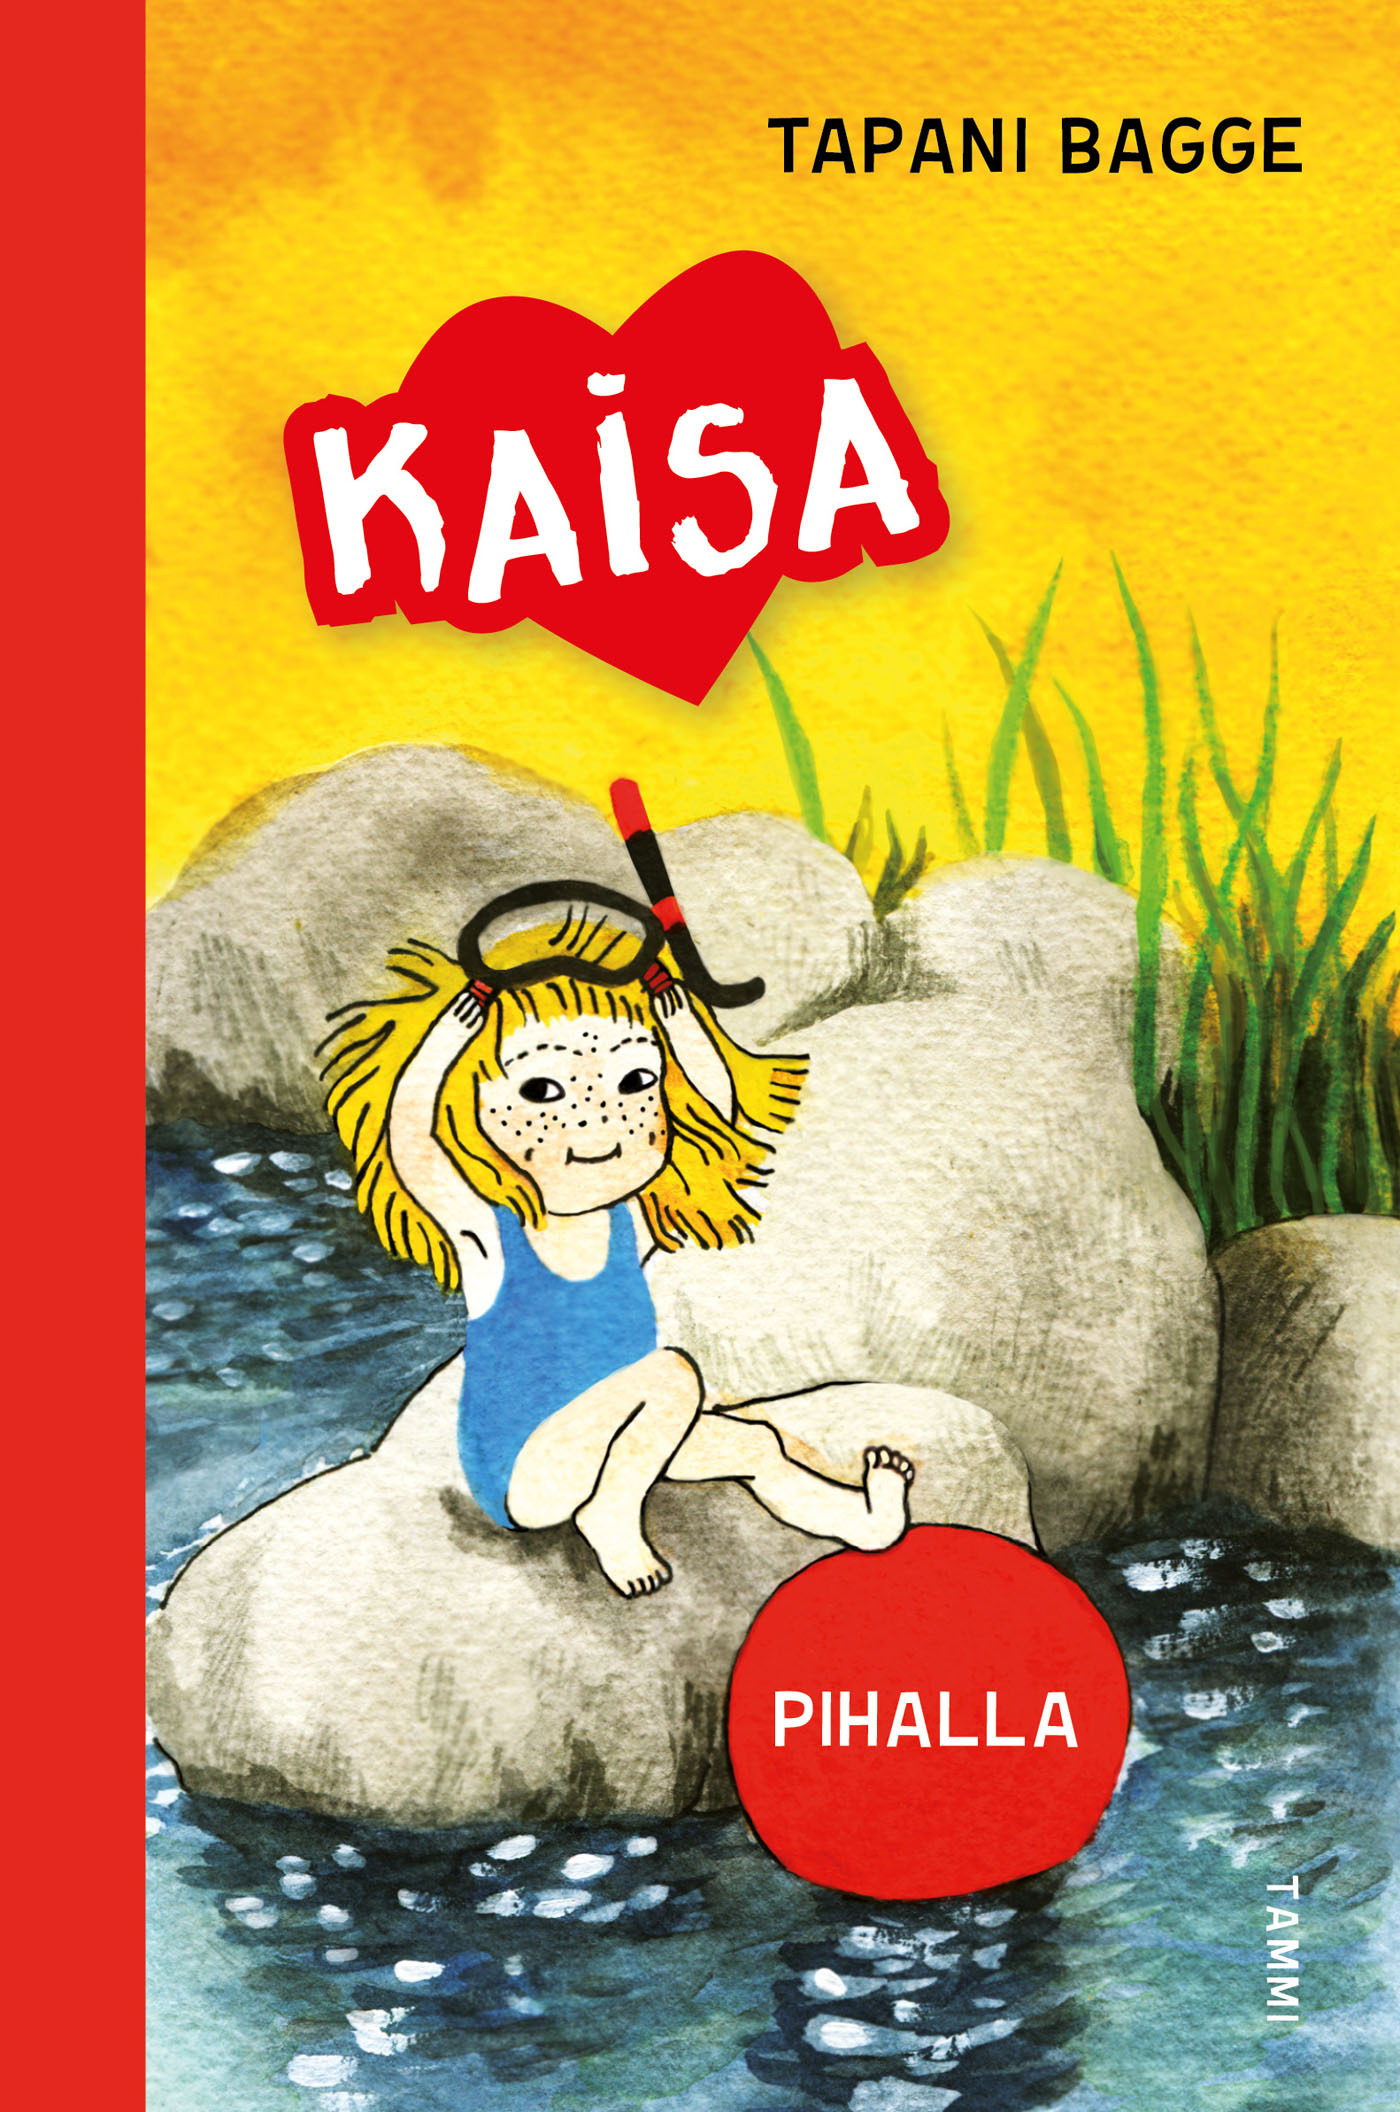 Bagge, Tapani - Pihalla (Kaisa-sarja), ebook